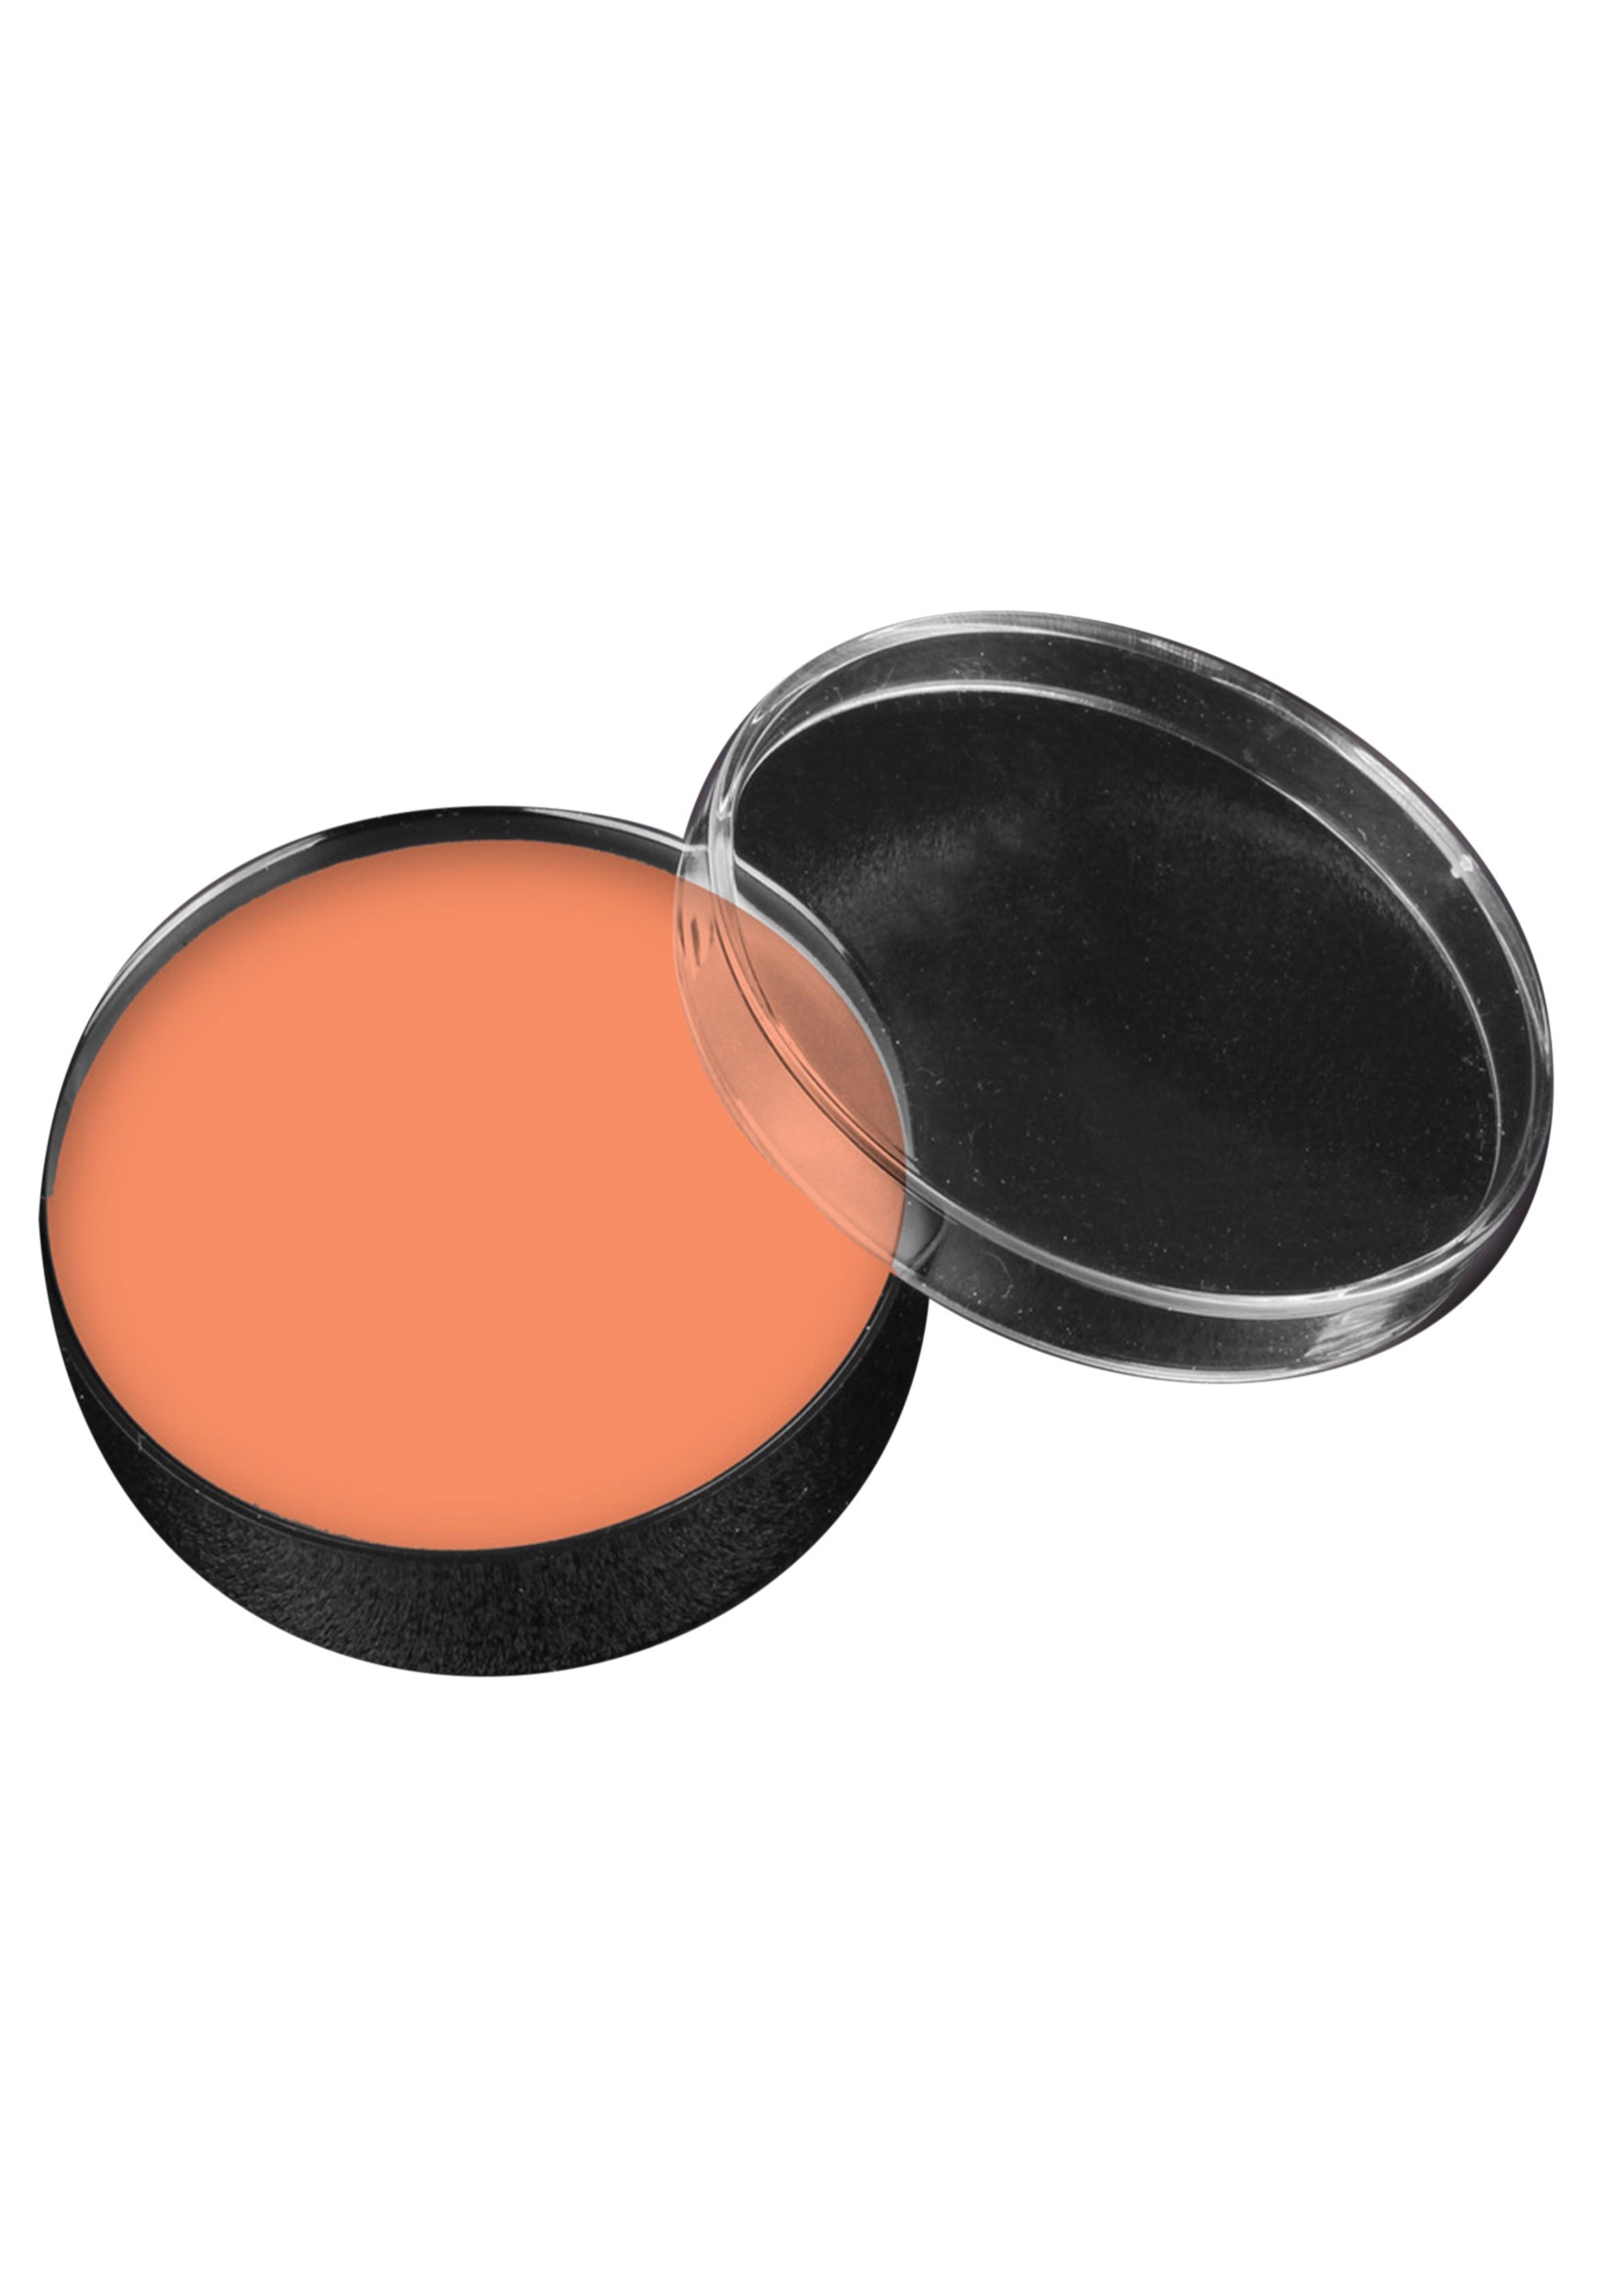 Mehron Premium Greasepaint Makeup 0.5 oz Orange